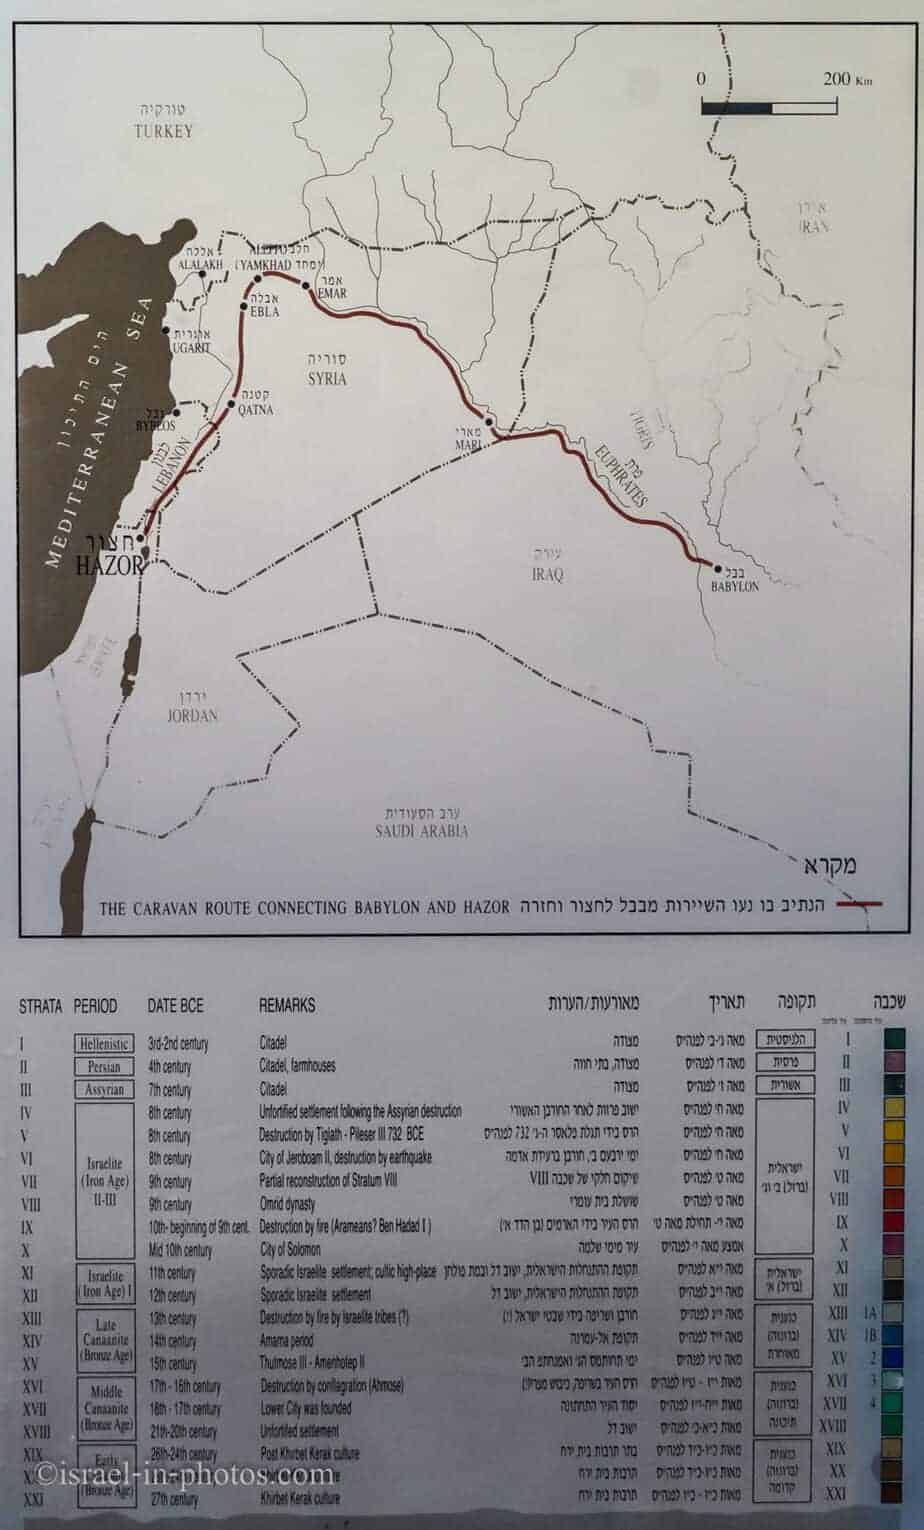 Caravan Route Connecting Babylon and Hazor